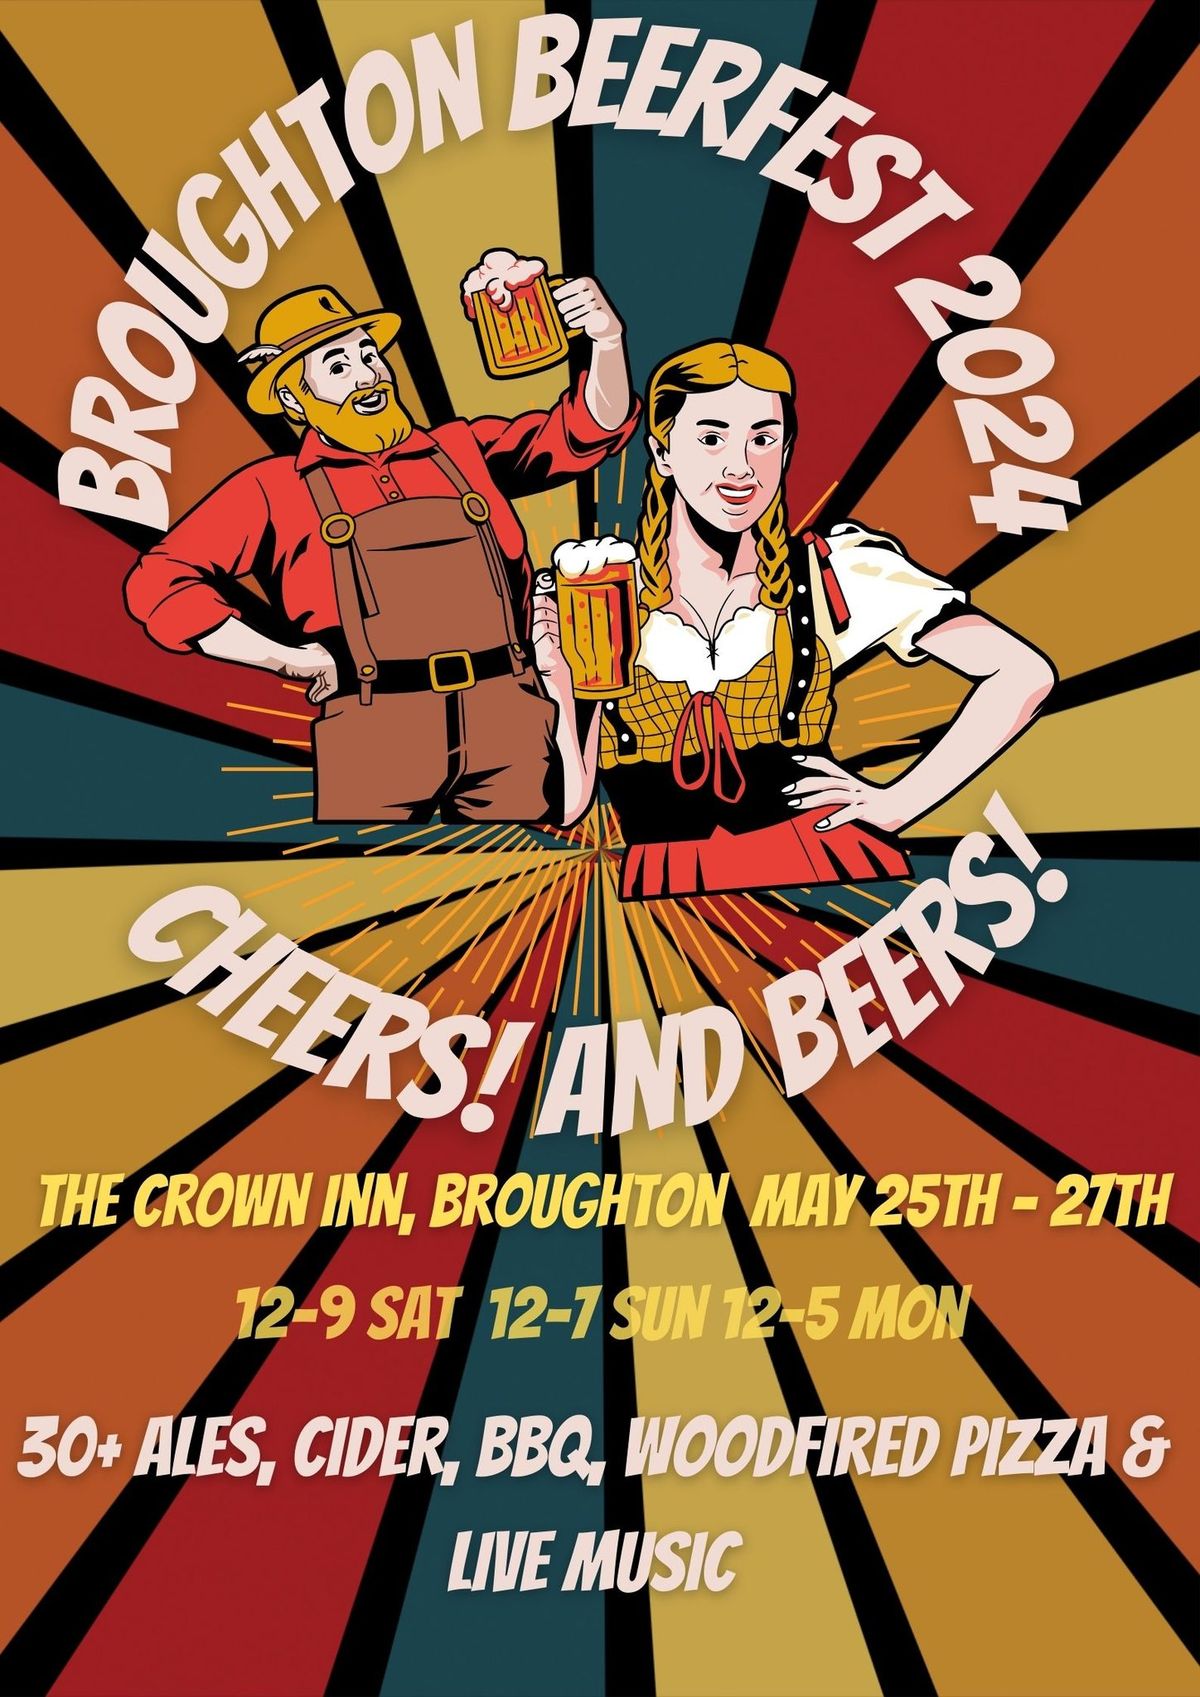 Broughton Beerfest24